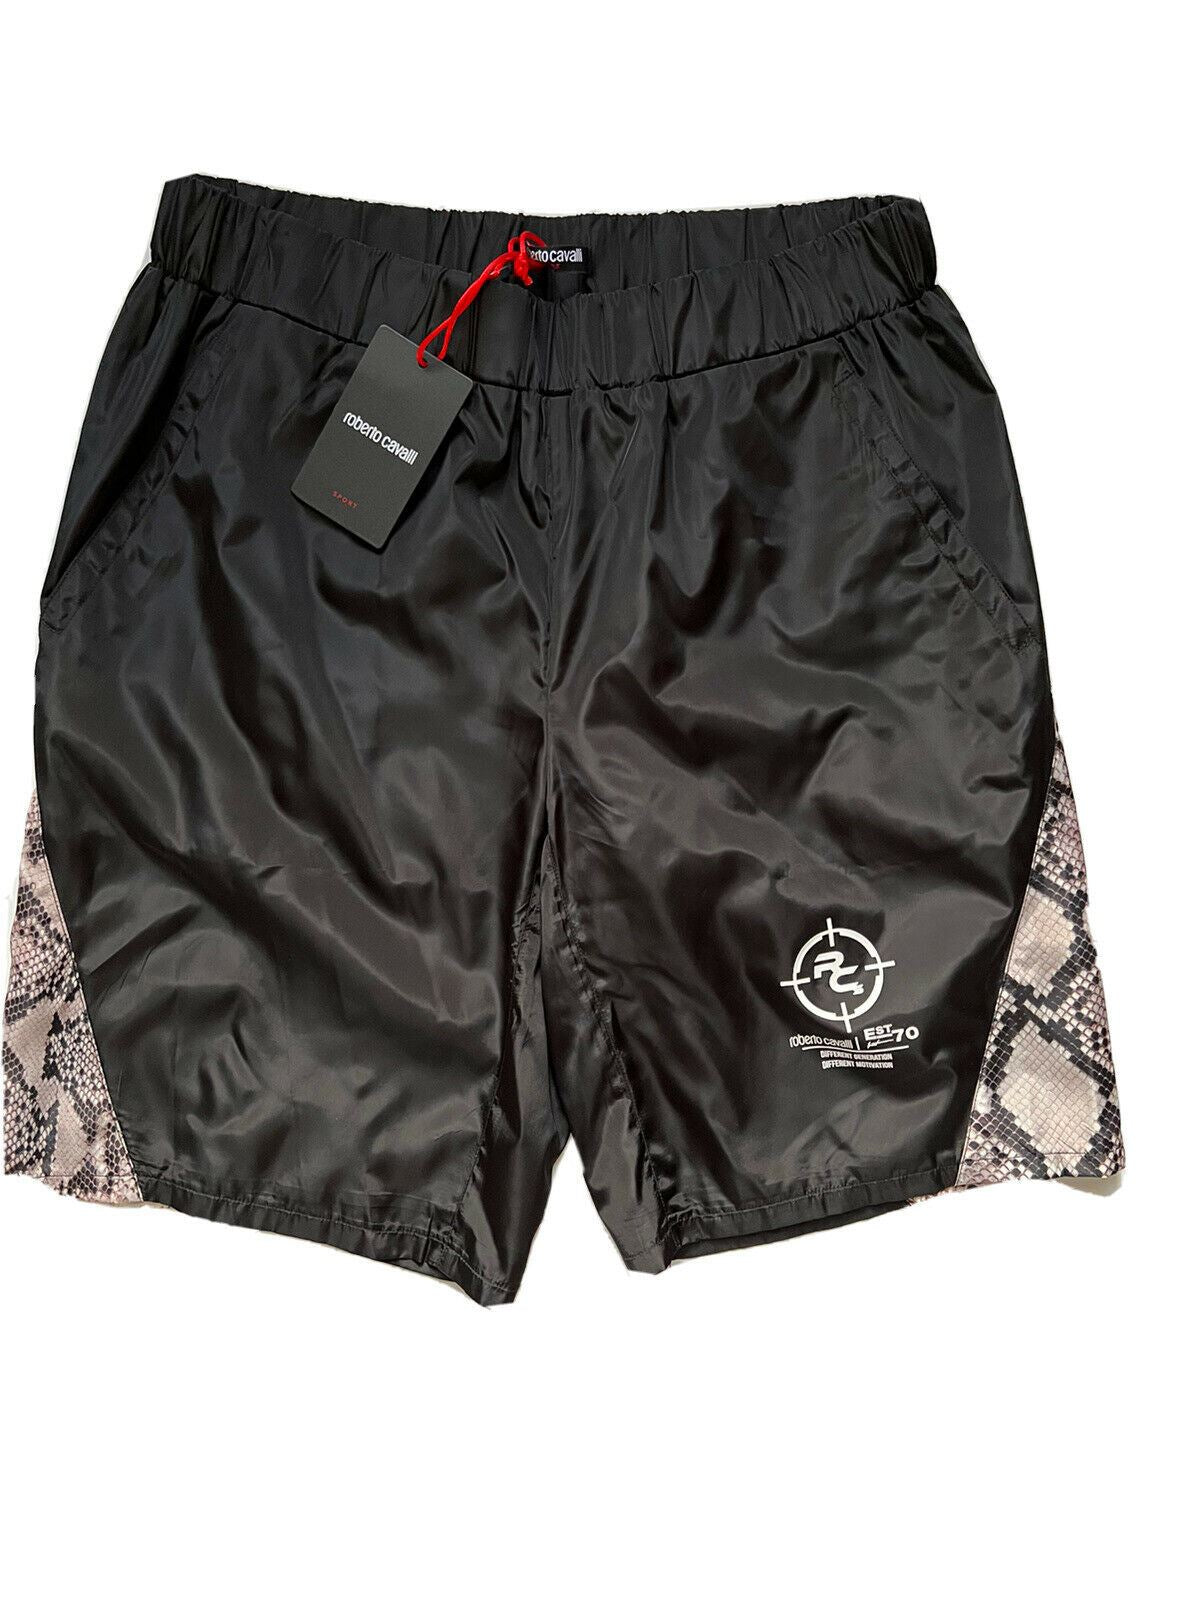 NWT $440 Roberto Cavalli Men's Black Swimsuit Shorts Size 2XL